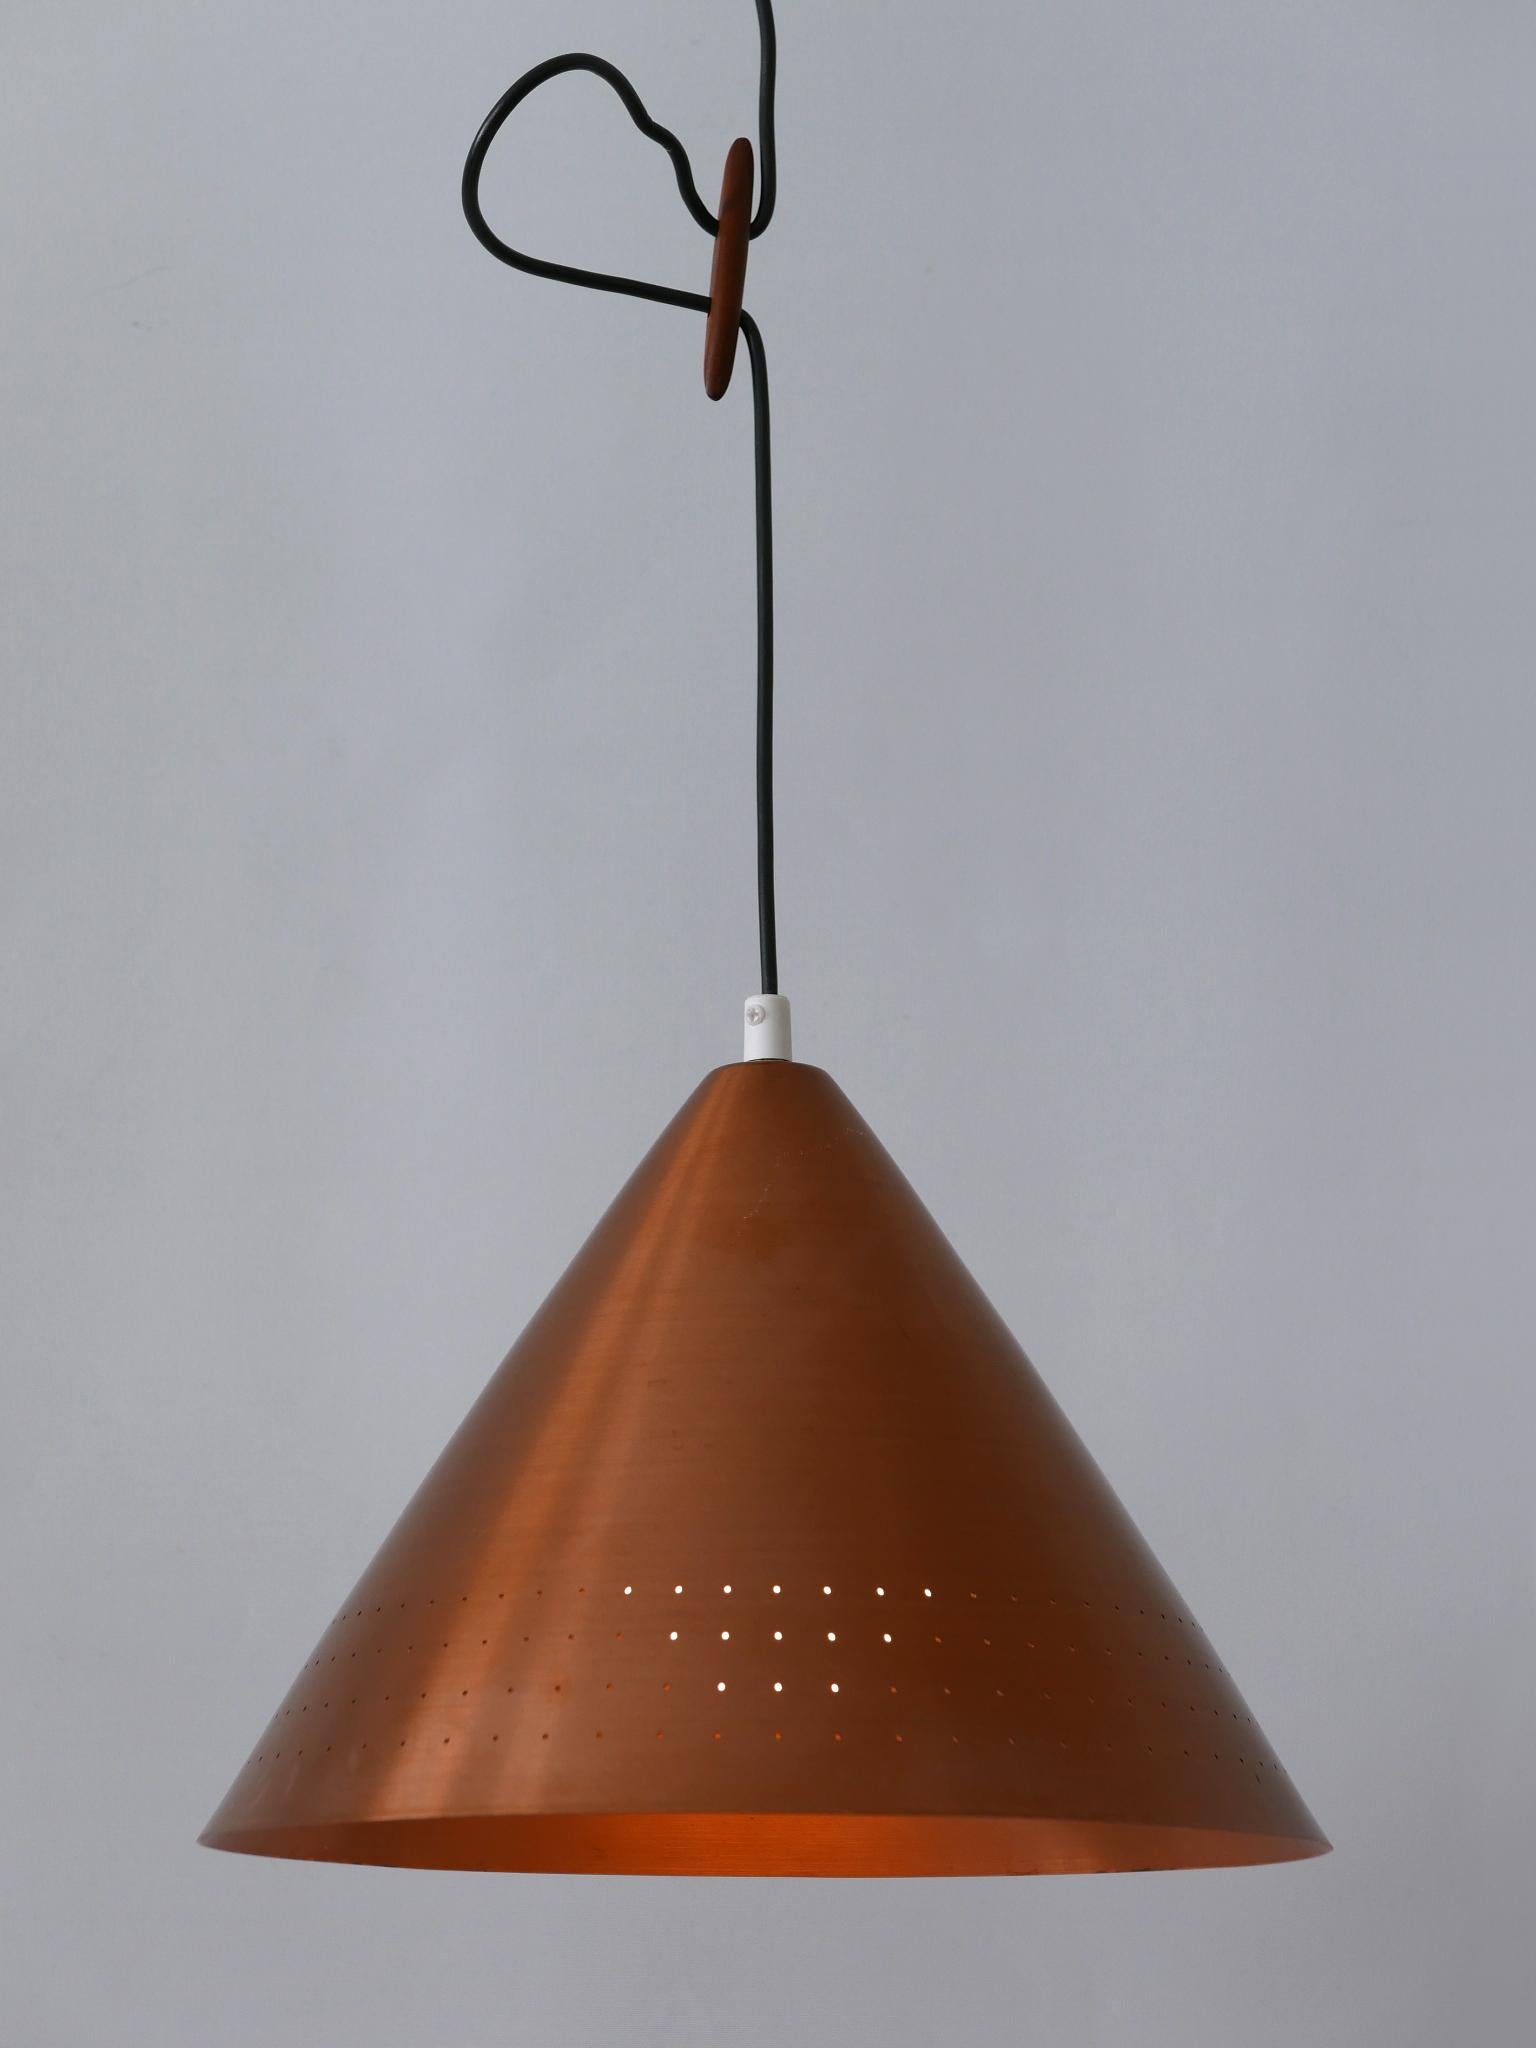 Rare Mid-Century Modern Scandinavian Copper Pendant Lamp or Hanging Light  1960s For Sale 8